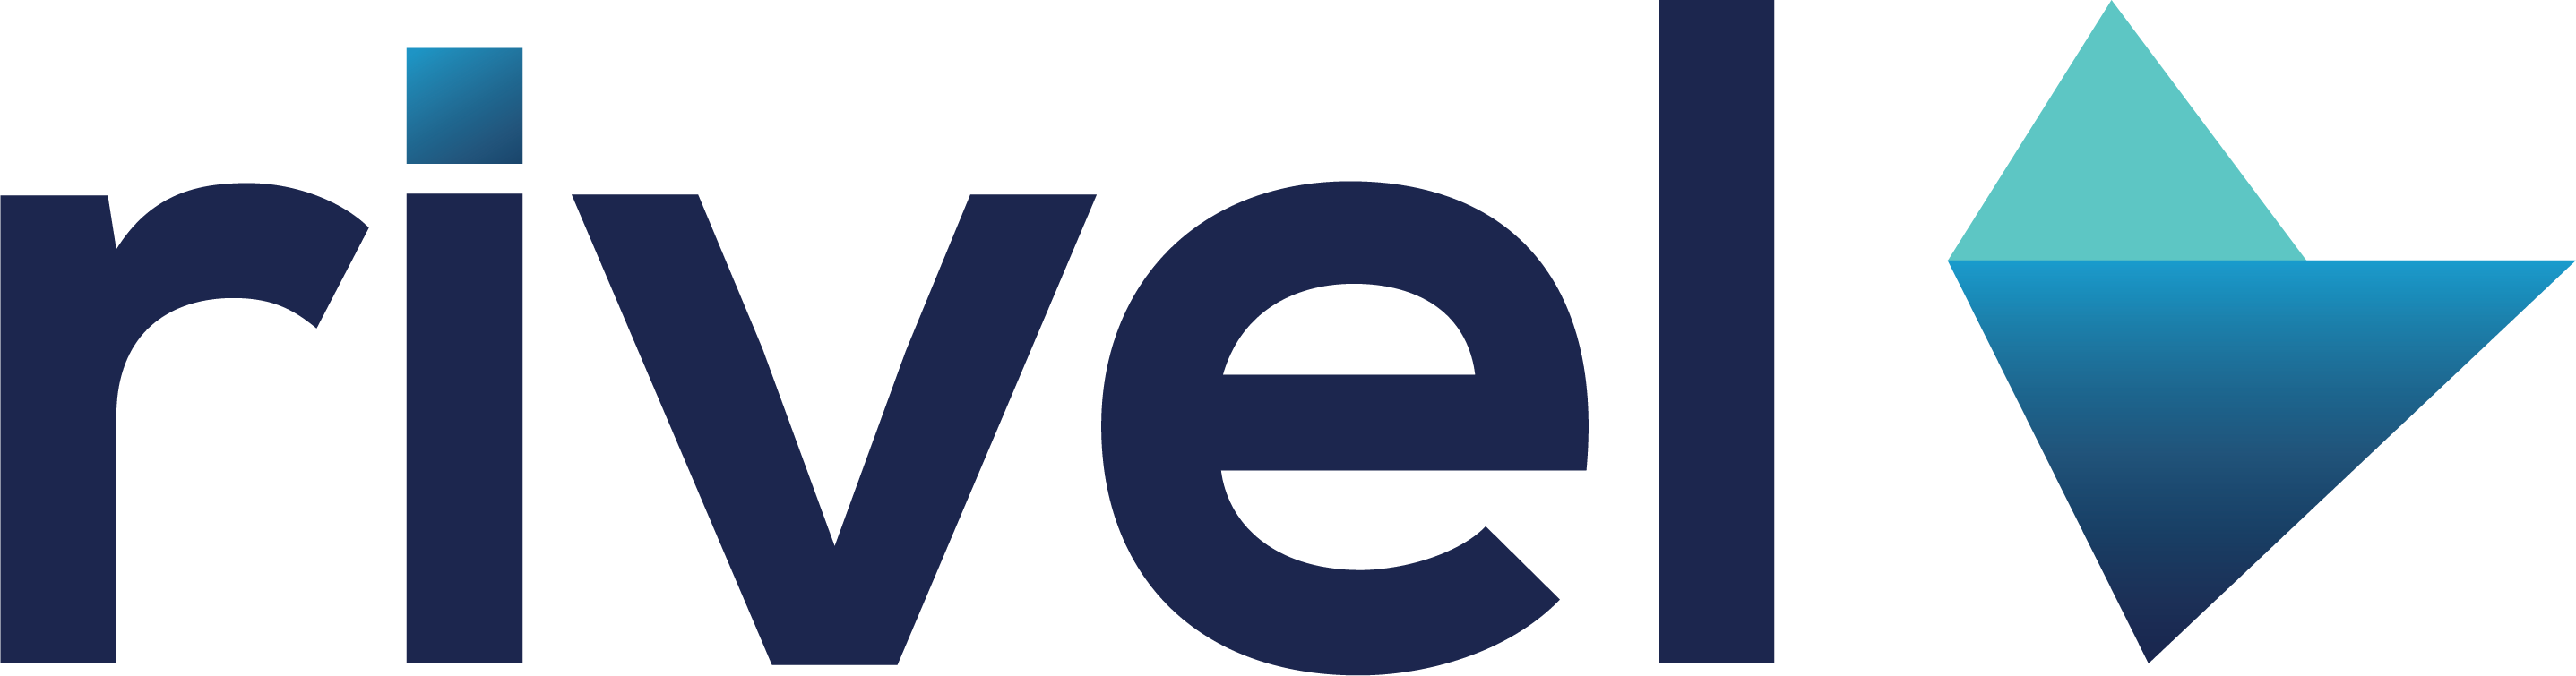 Rivel, Inc. logo